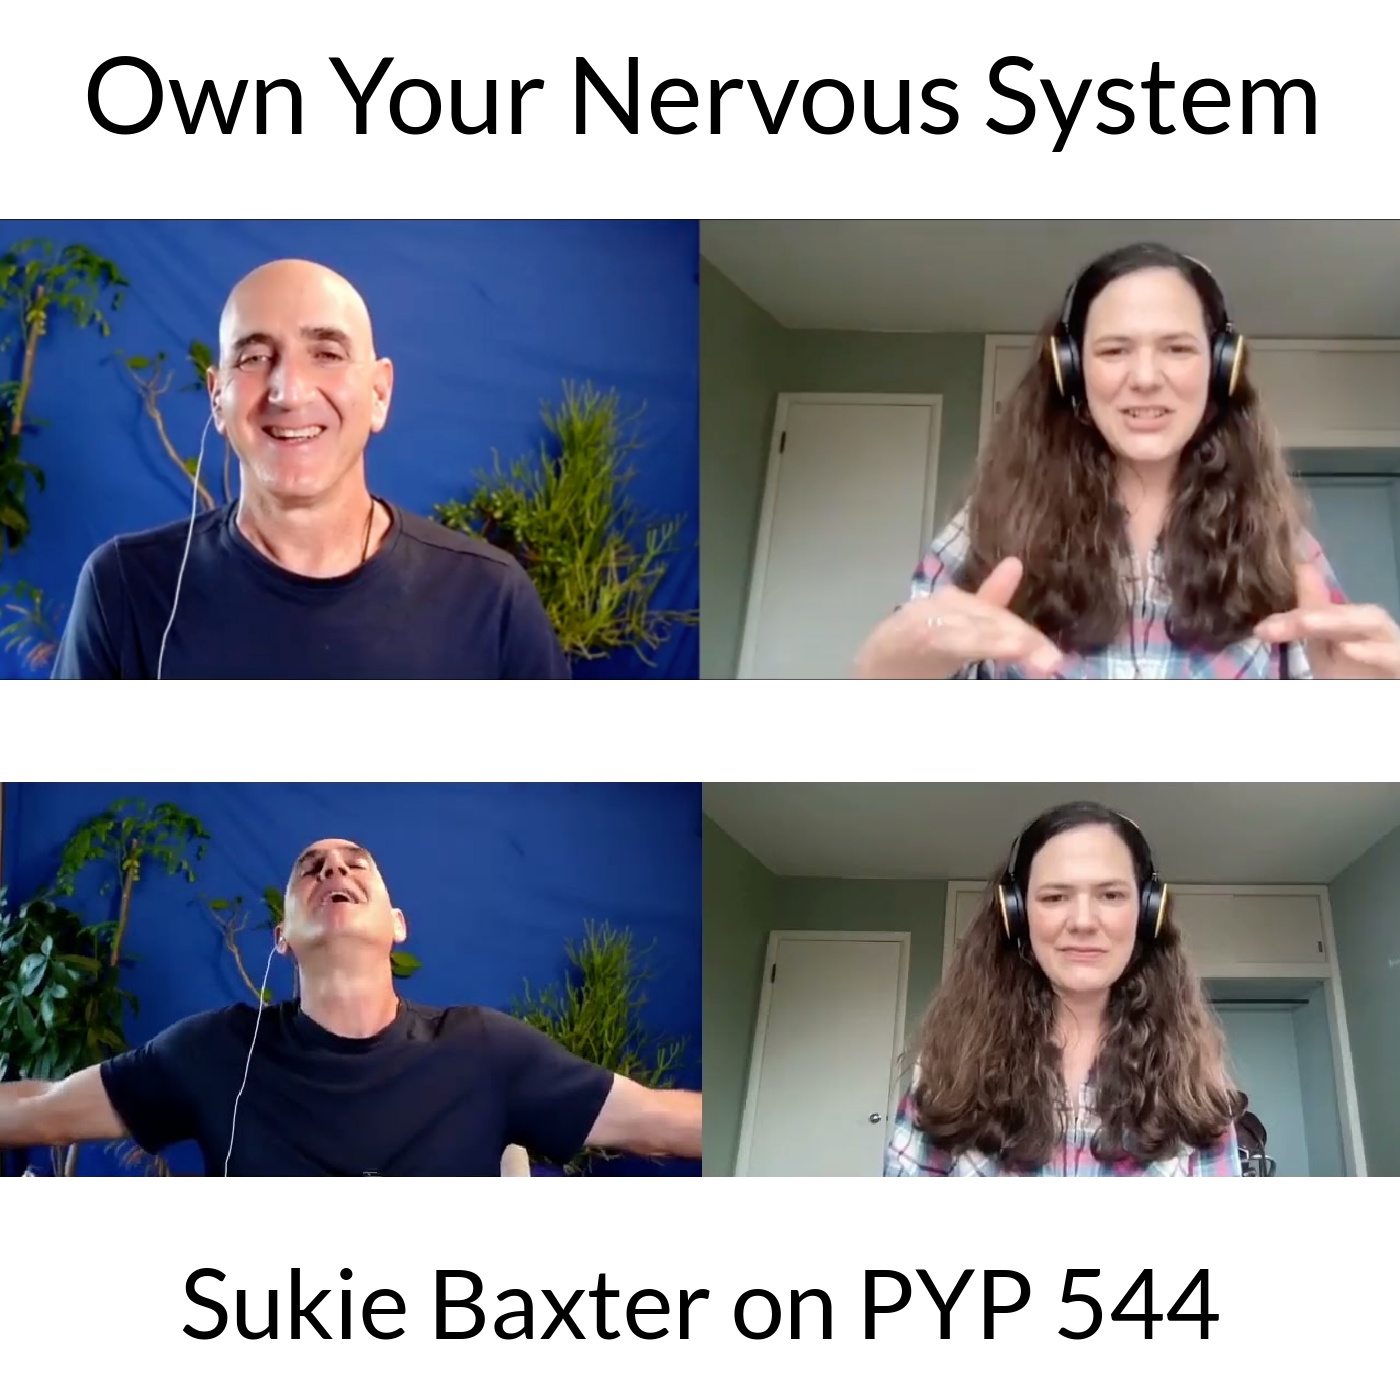 Own Your Nervous System: Sukie Baxter on PYP 544